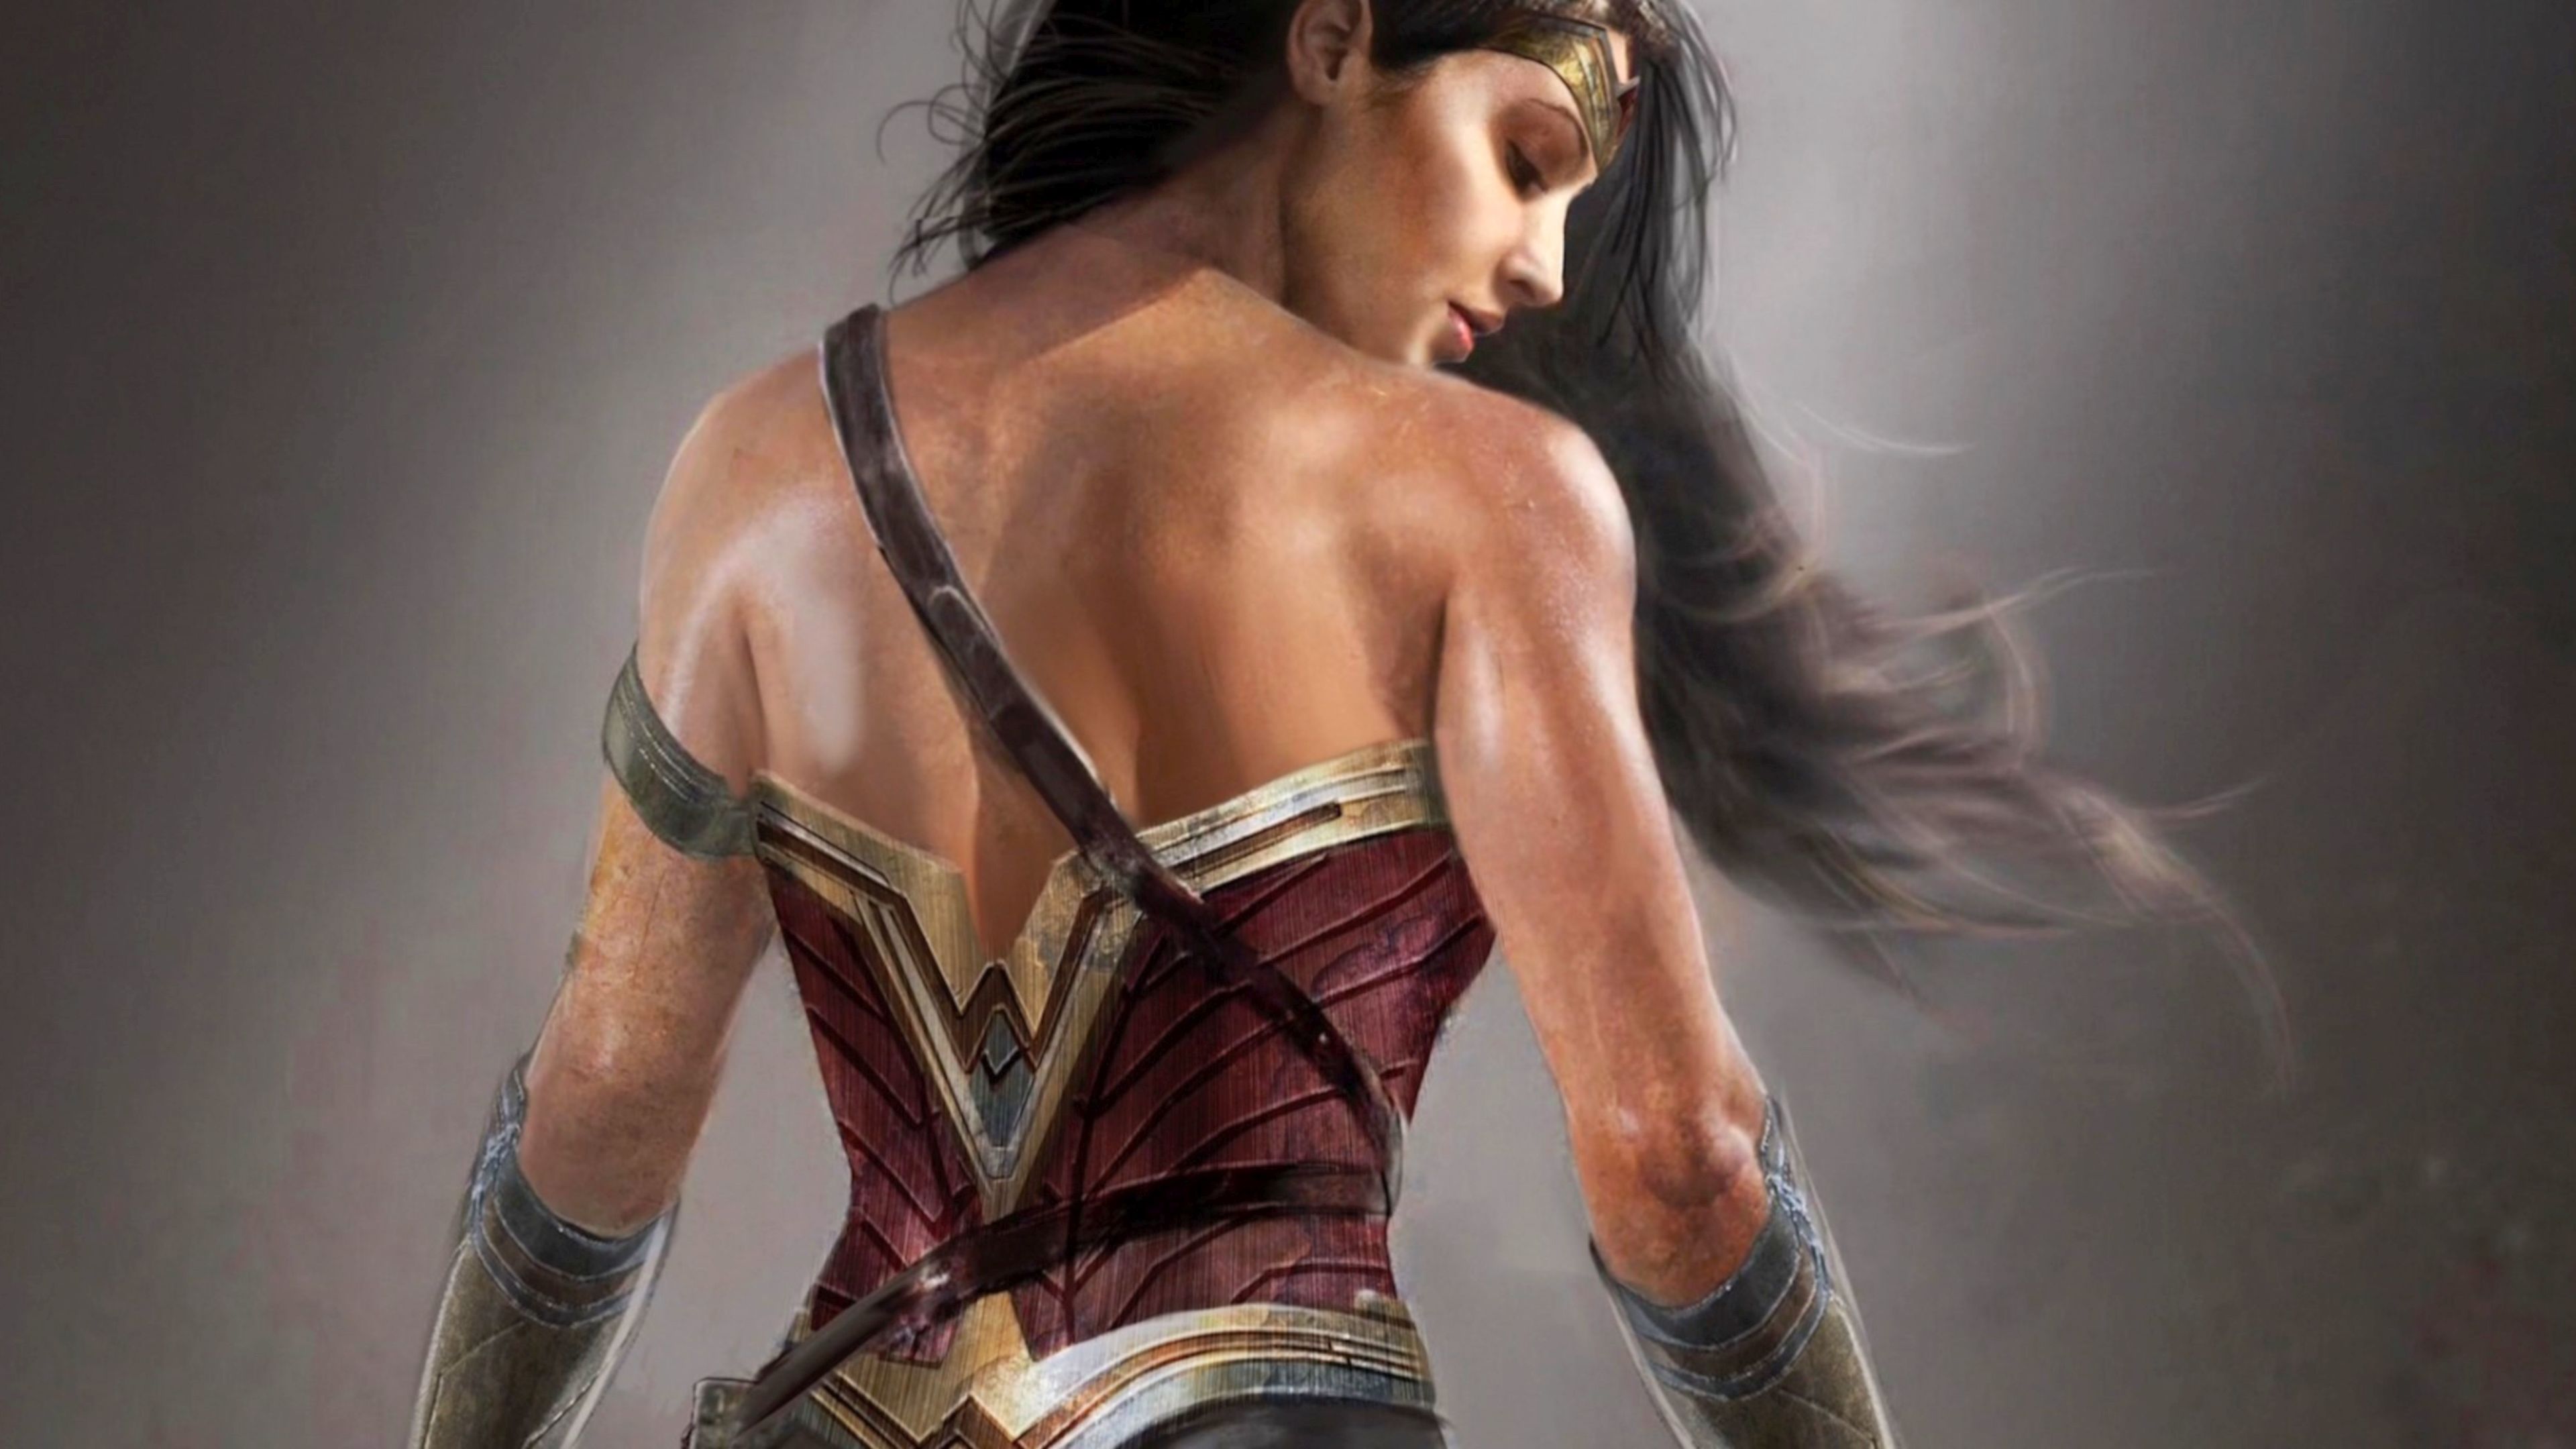 Gal Gadot As Wonder Woman Wallpapers